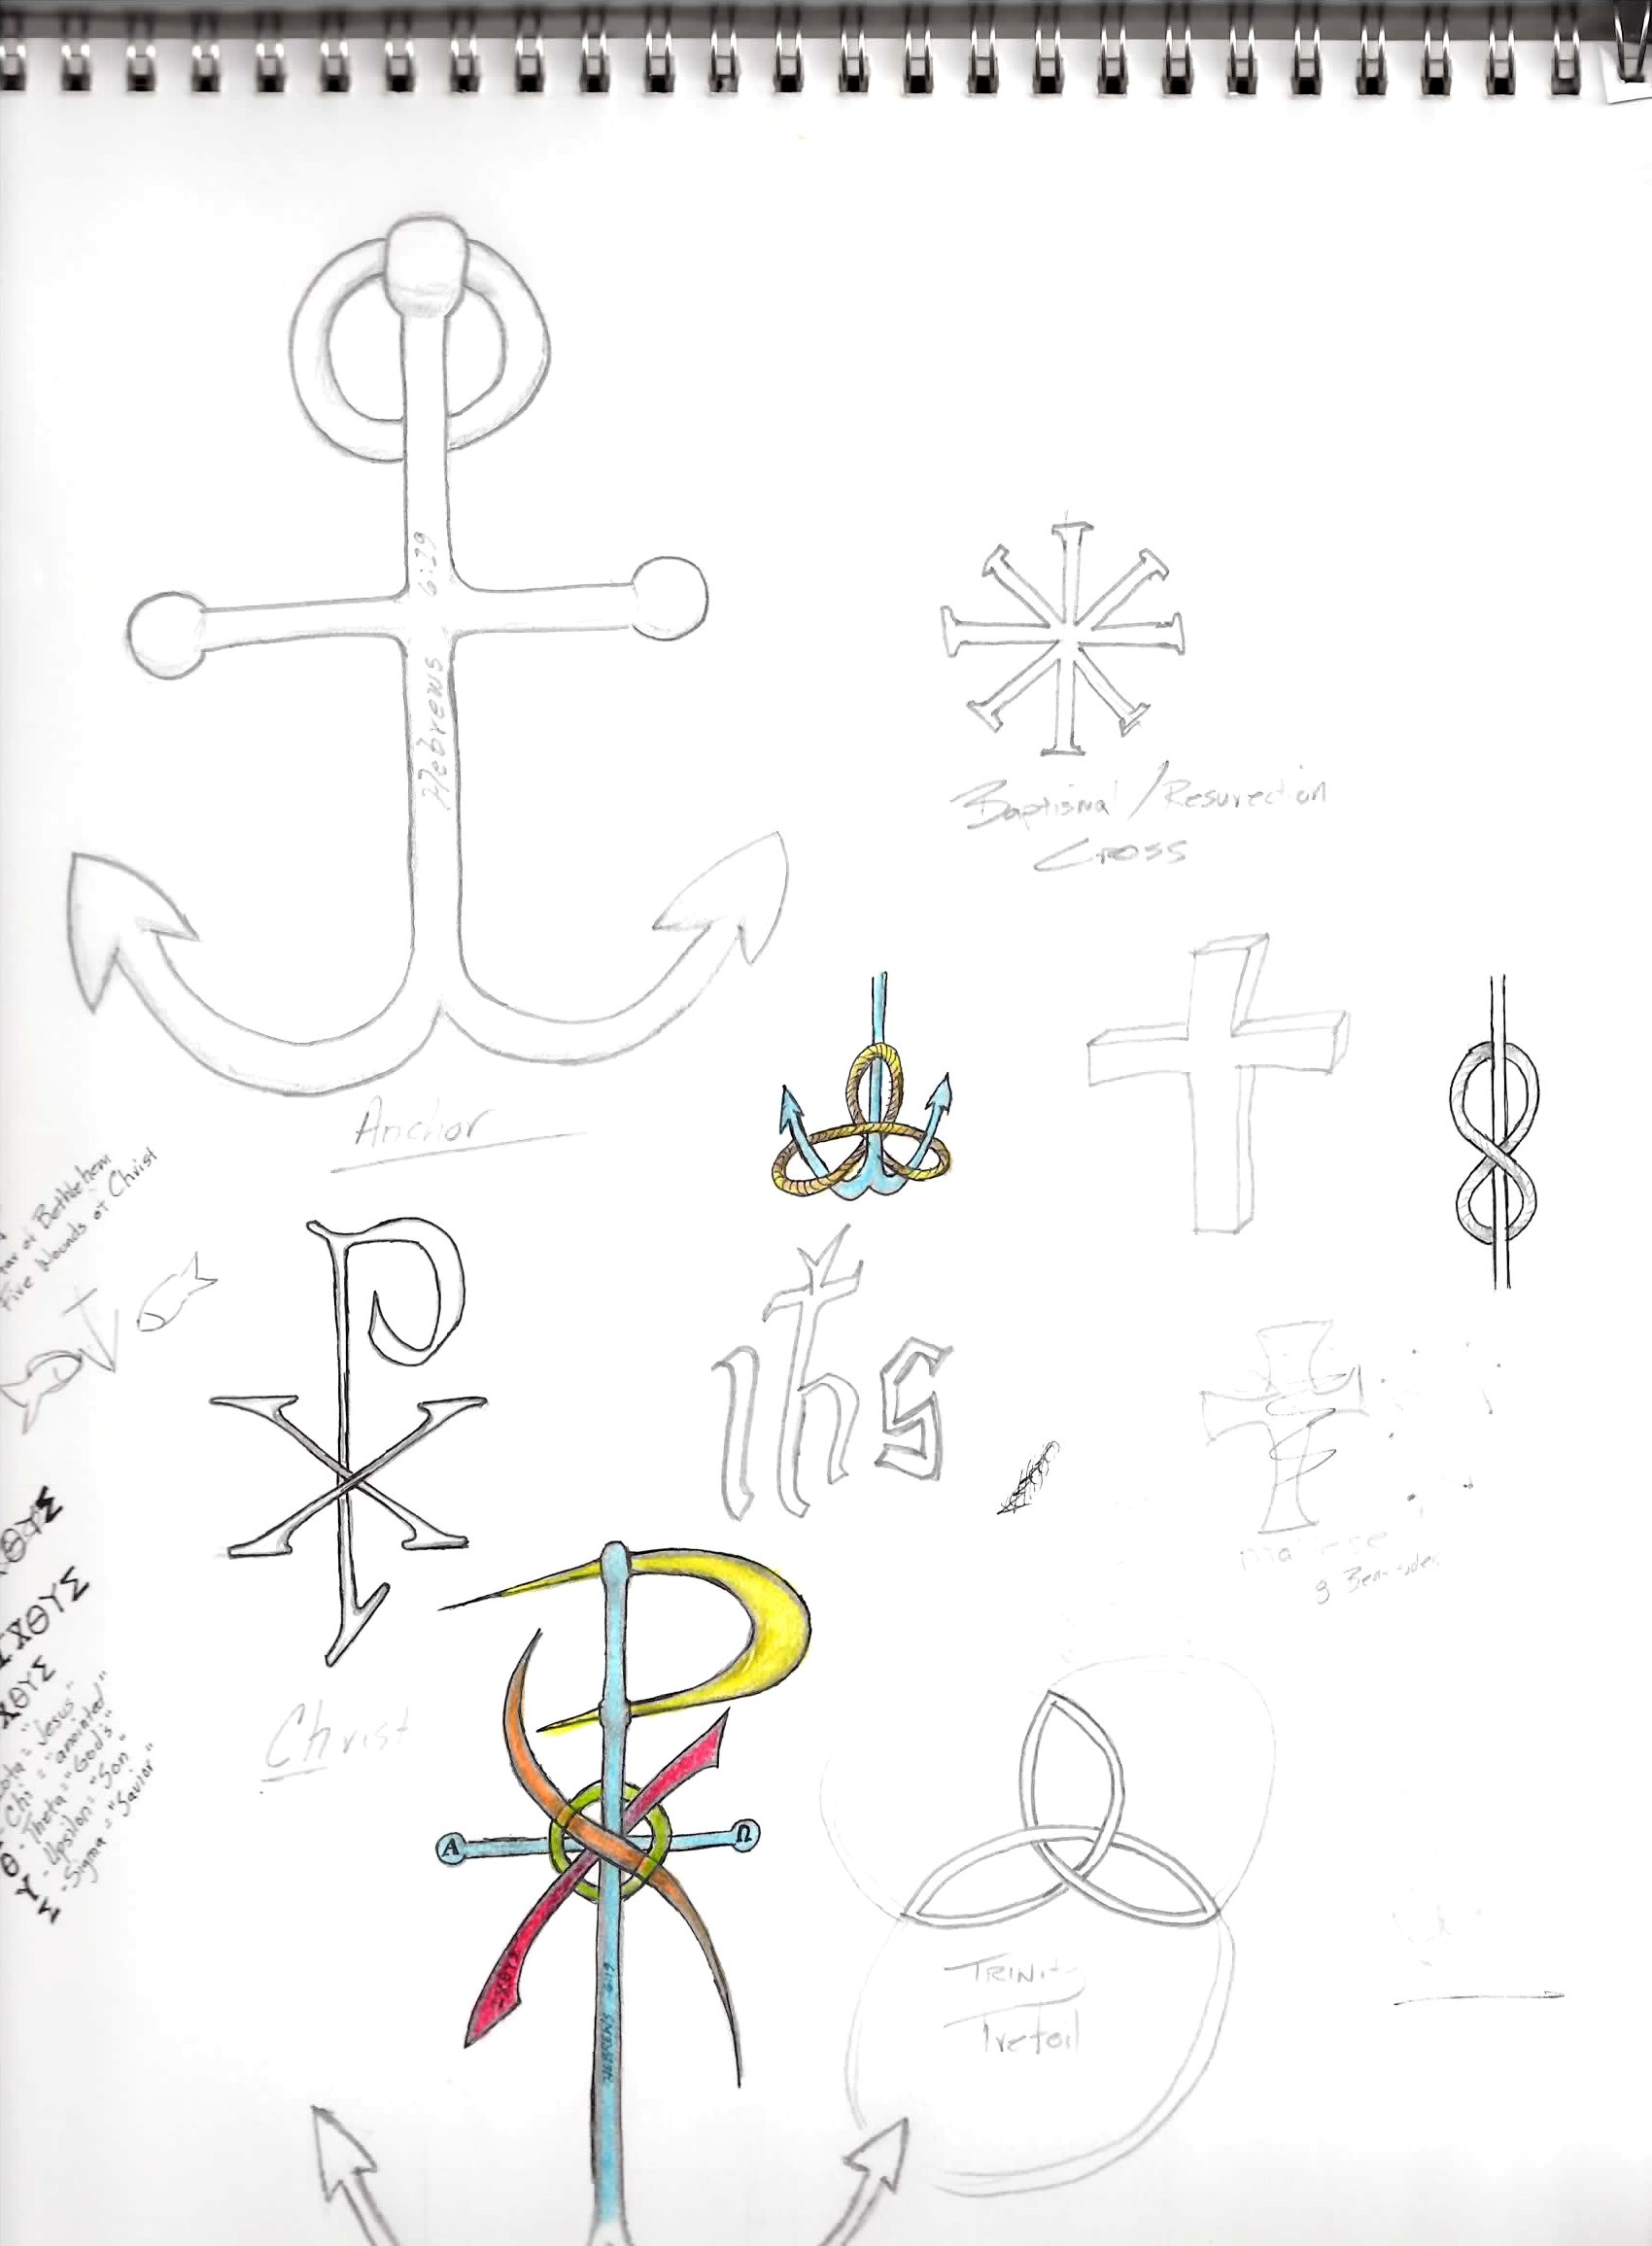 Some Symbolic Doodles